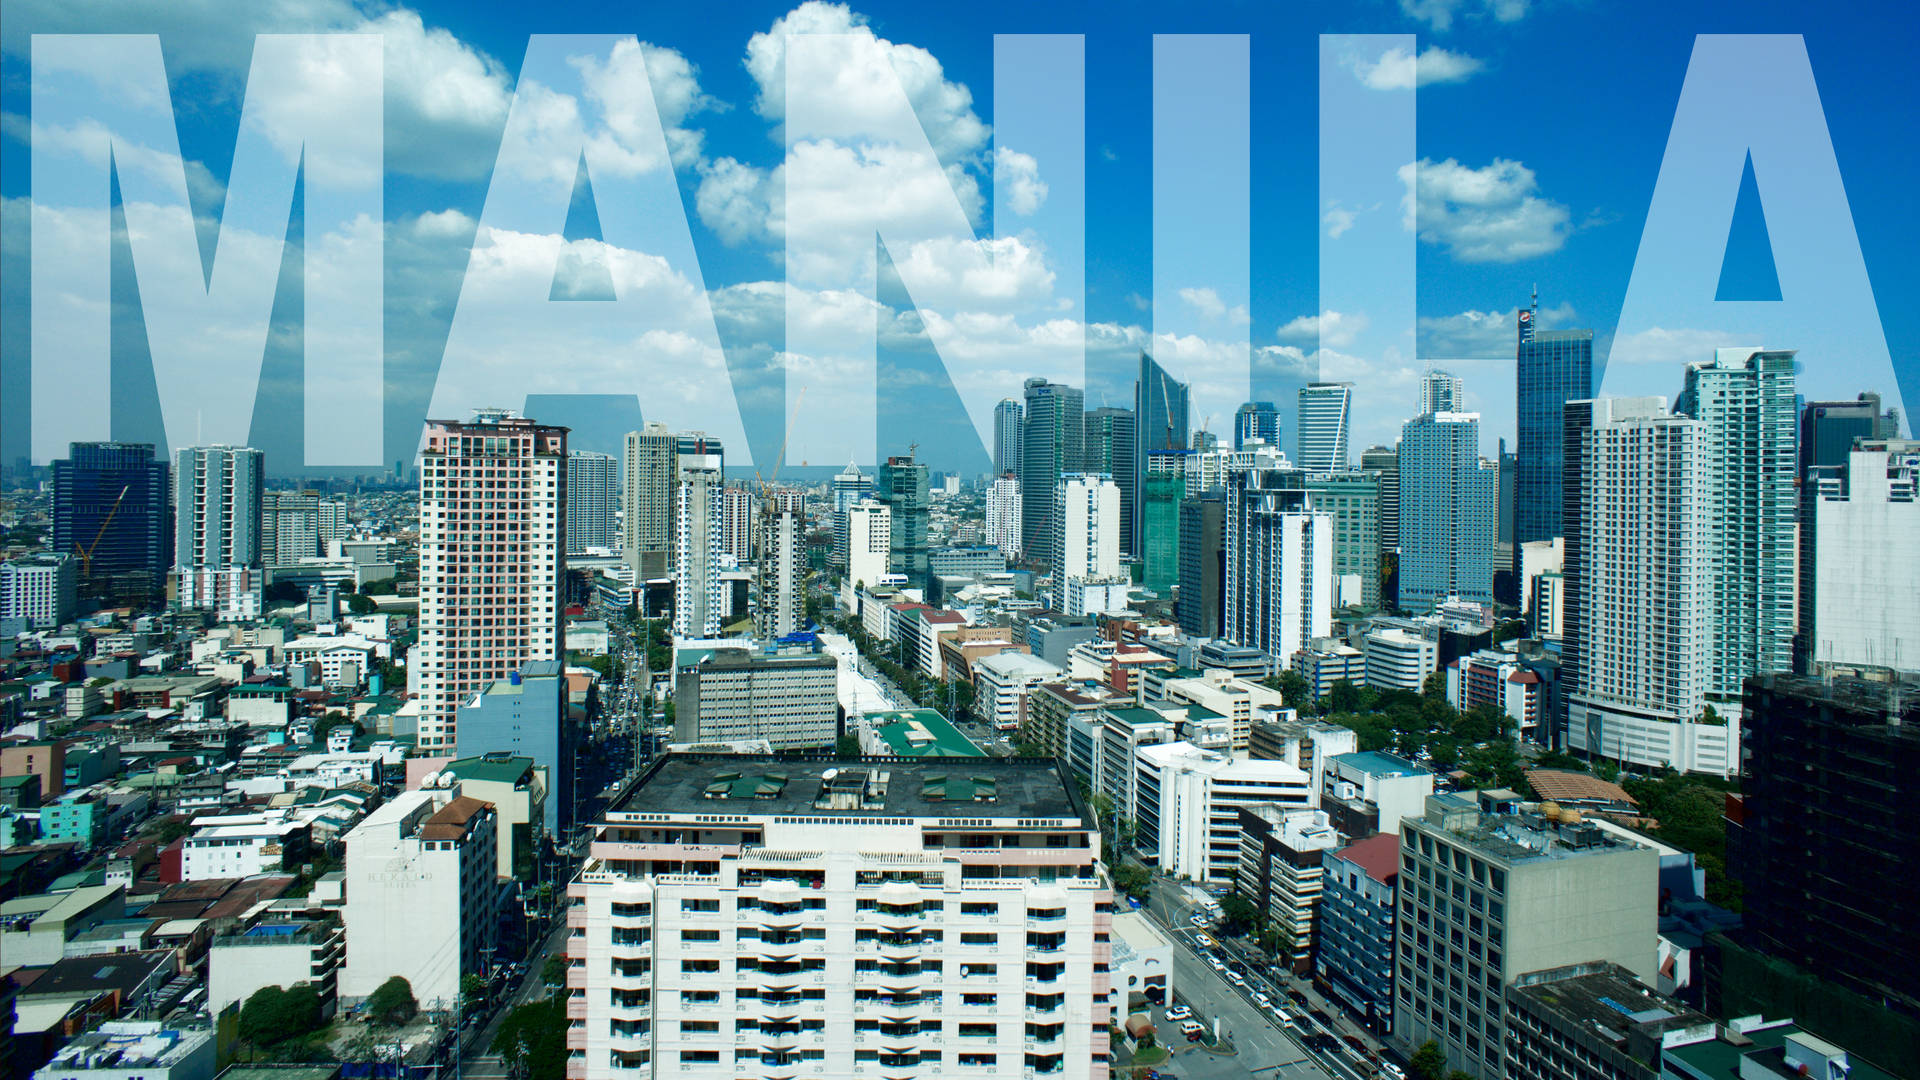 Manila - The Vibrant City of Colours Wallpaper